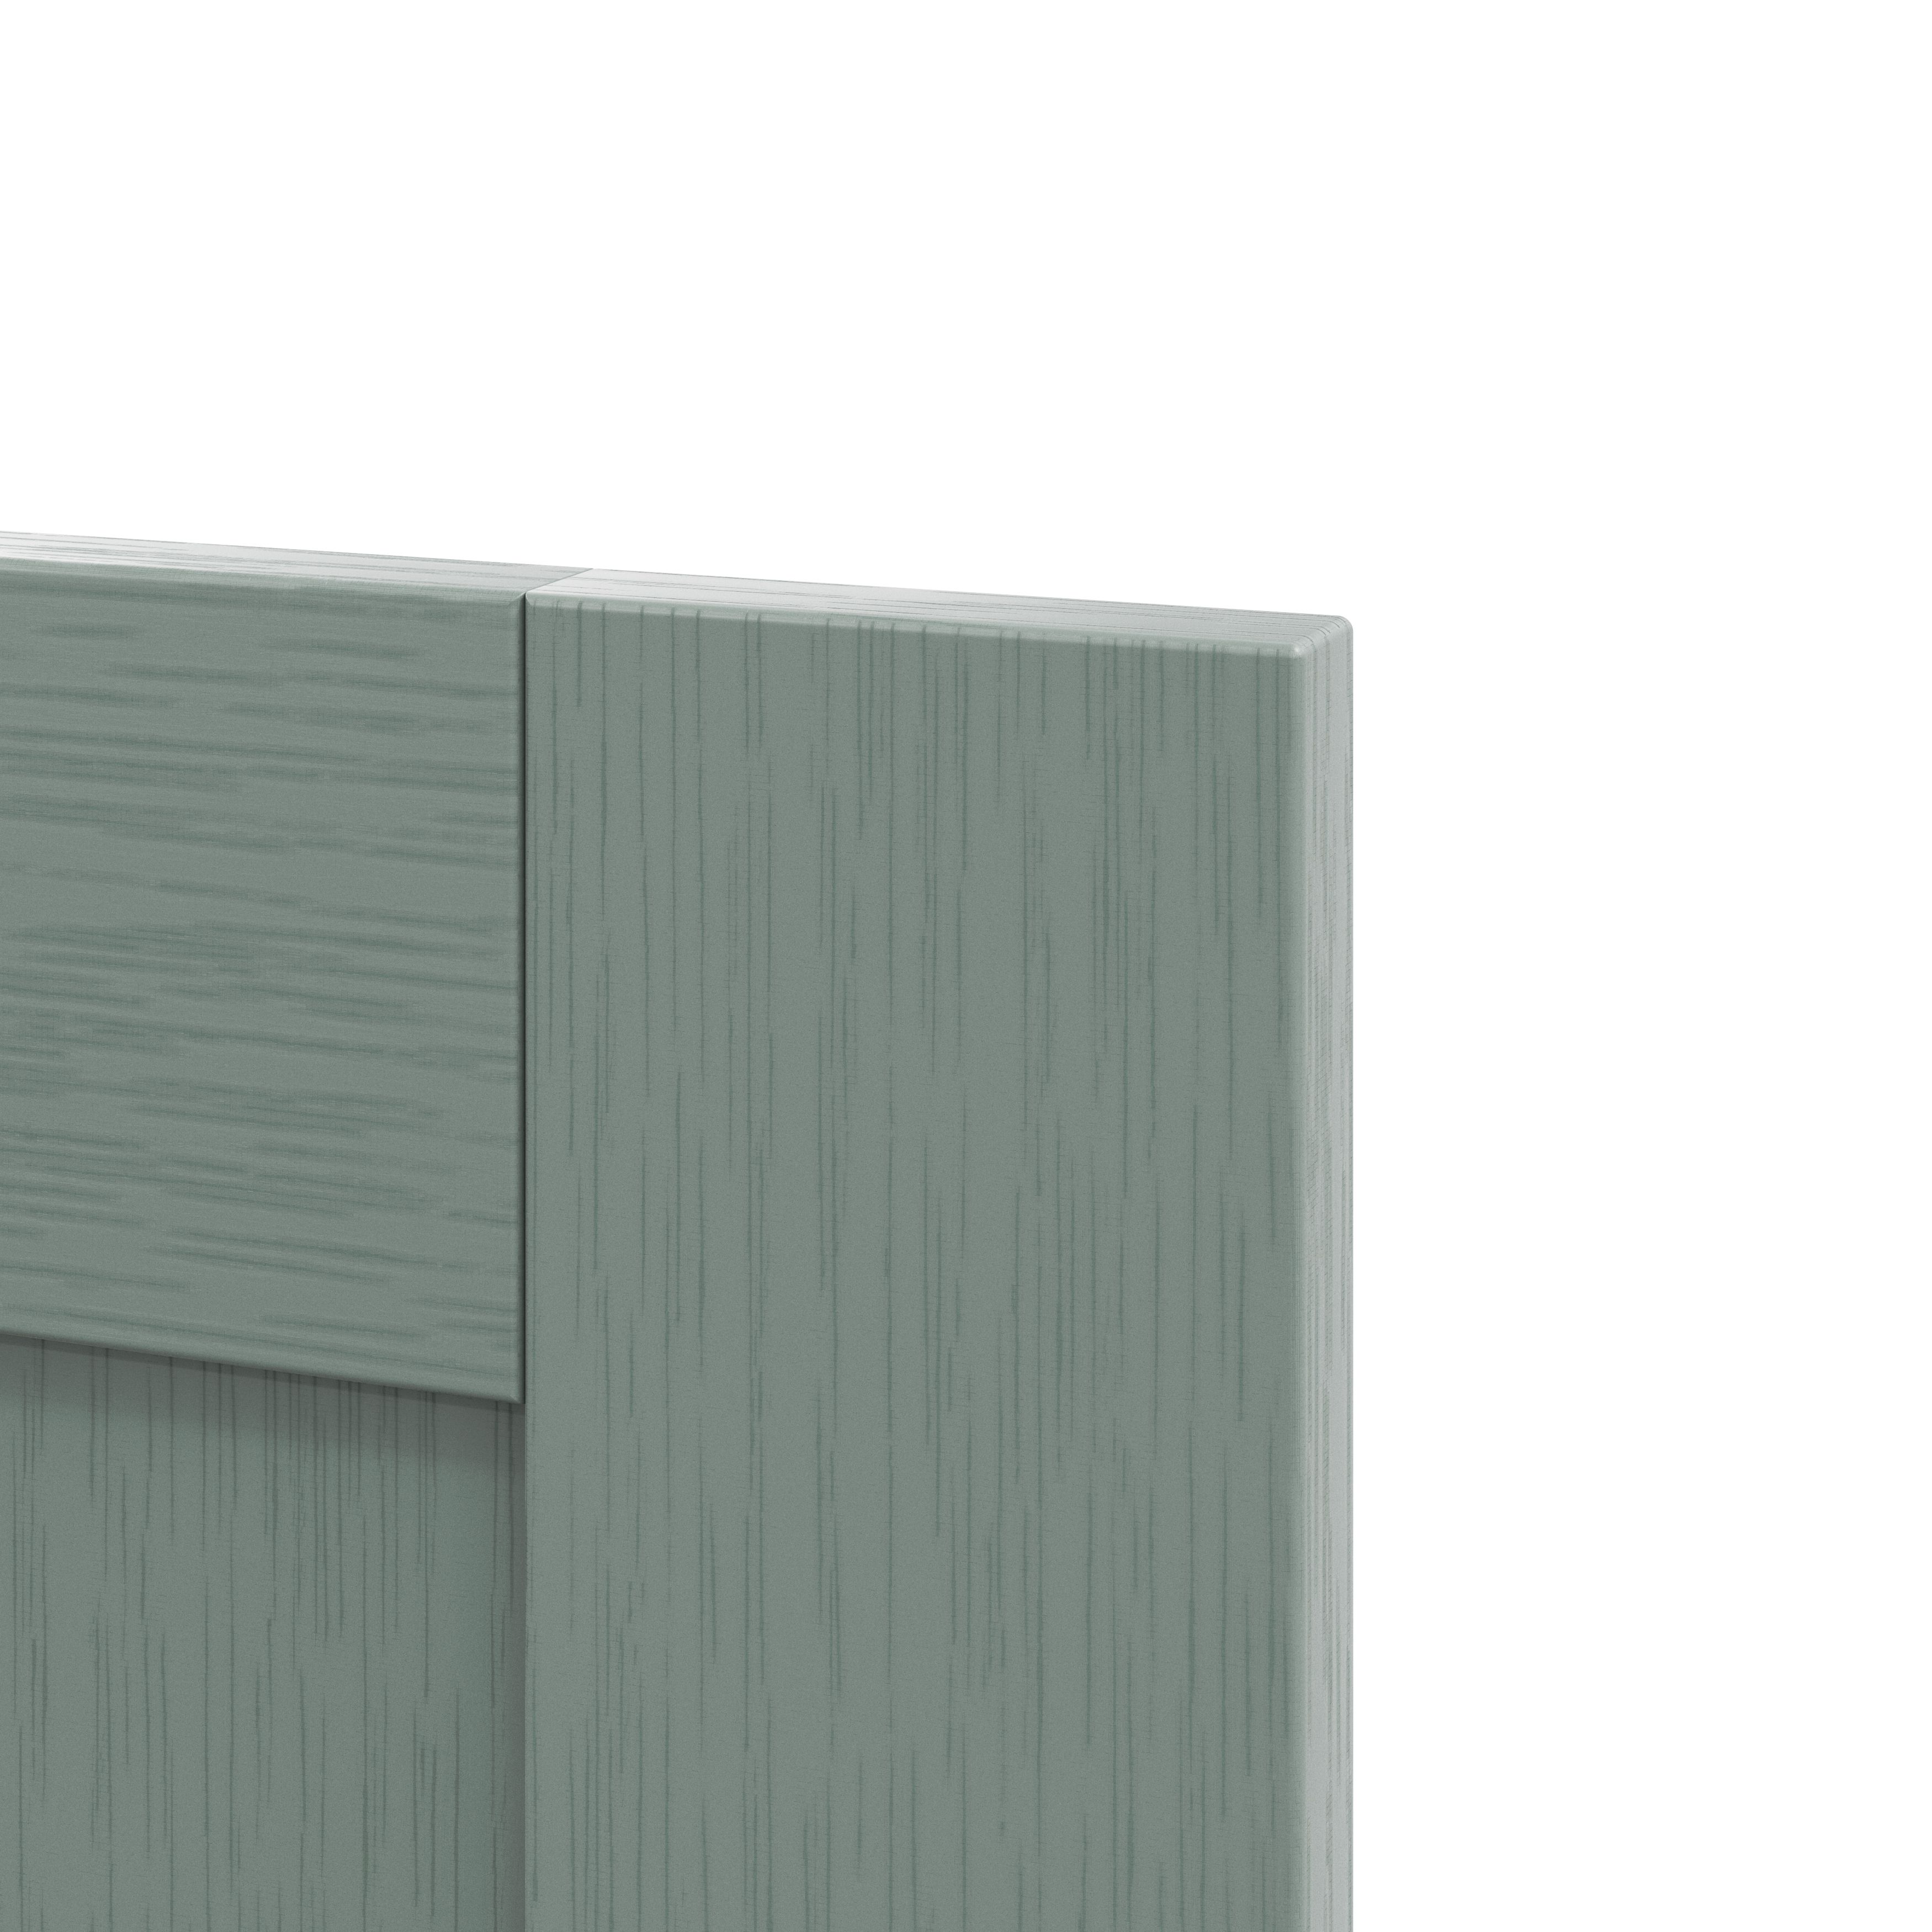 GoodHome Alpinia Matt Green Painted Wood Effect Shaker Highline Cabinet door (W)600mm (H)715mm (T)18mm